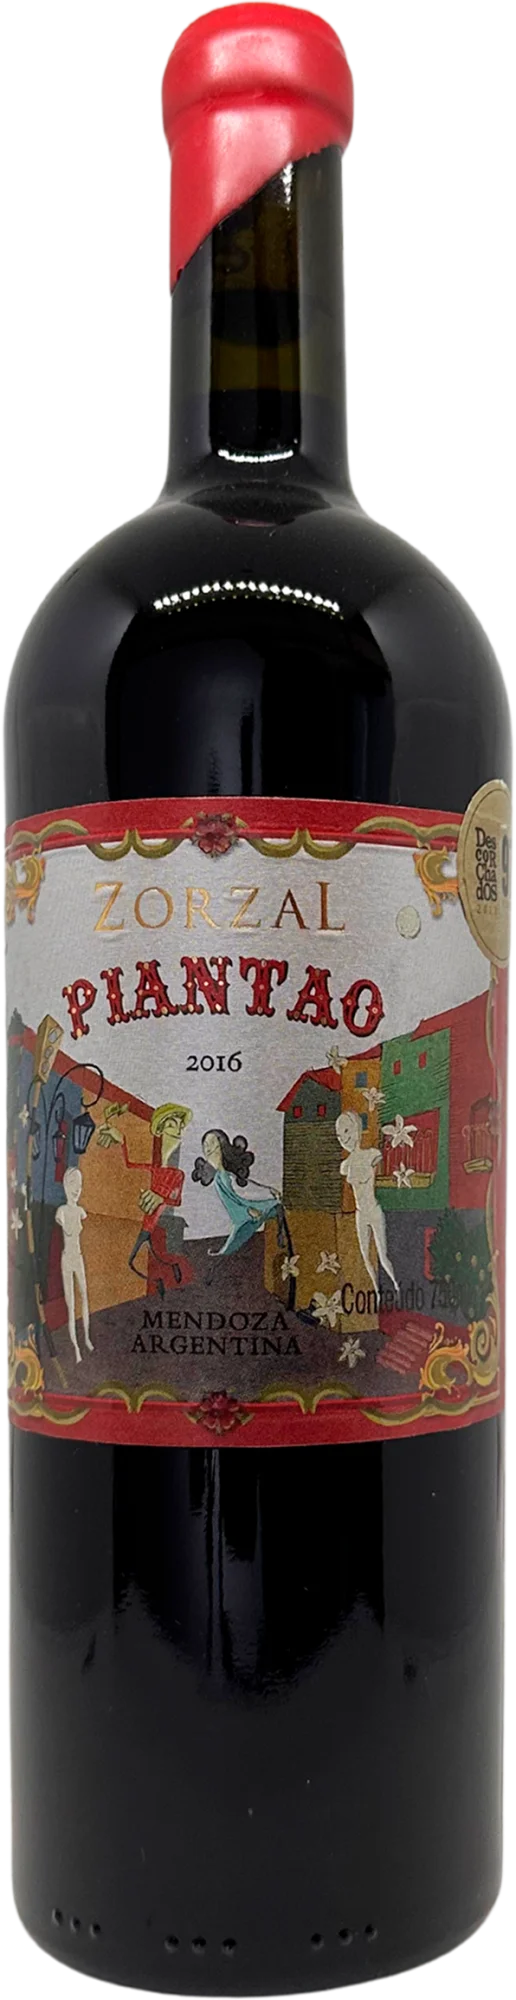 Piantao Zorzal Wines Cab Franc Malbec